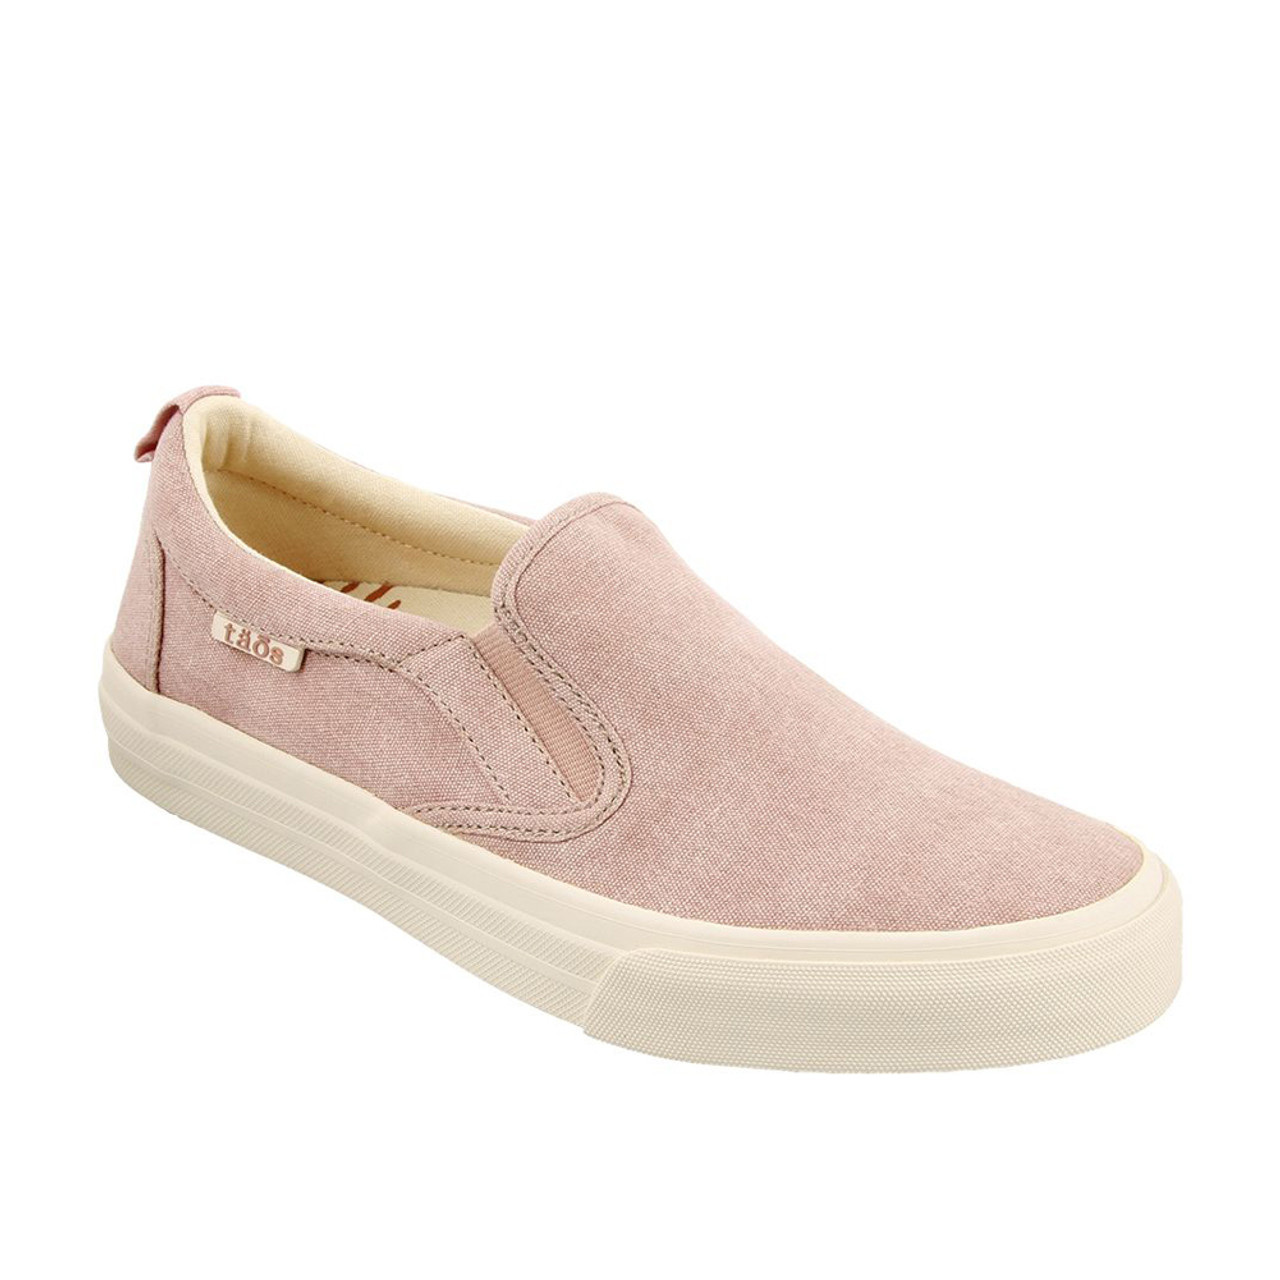 Taos Women's Rubber Soul Slip On Sneaker - Pink | Discount Taos Ladies ...